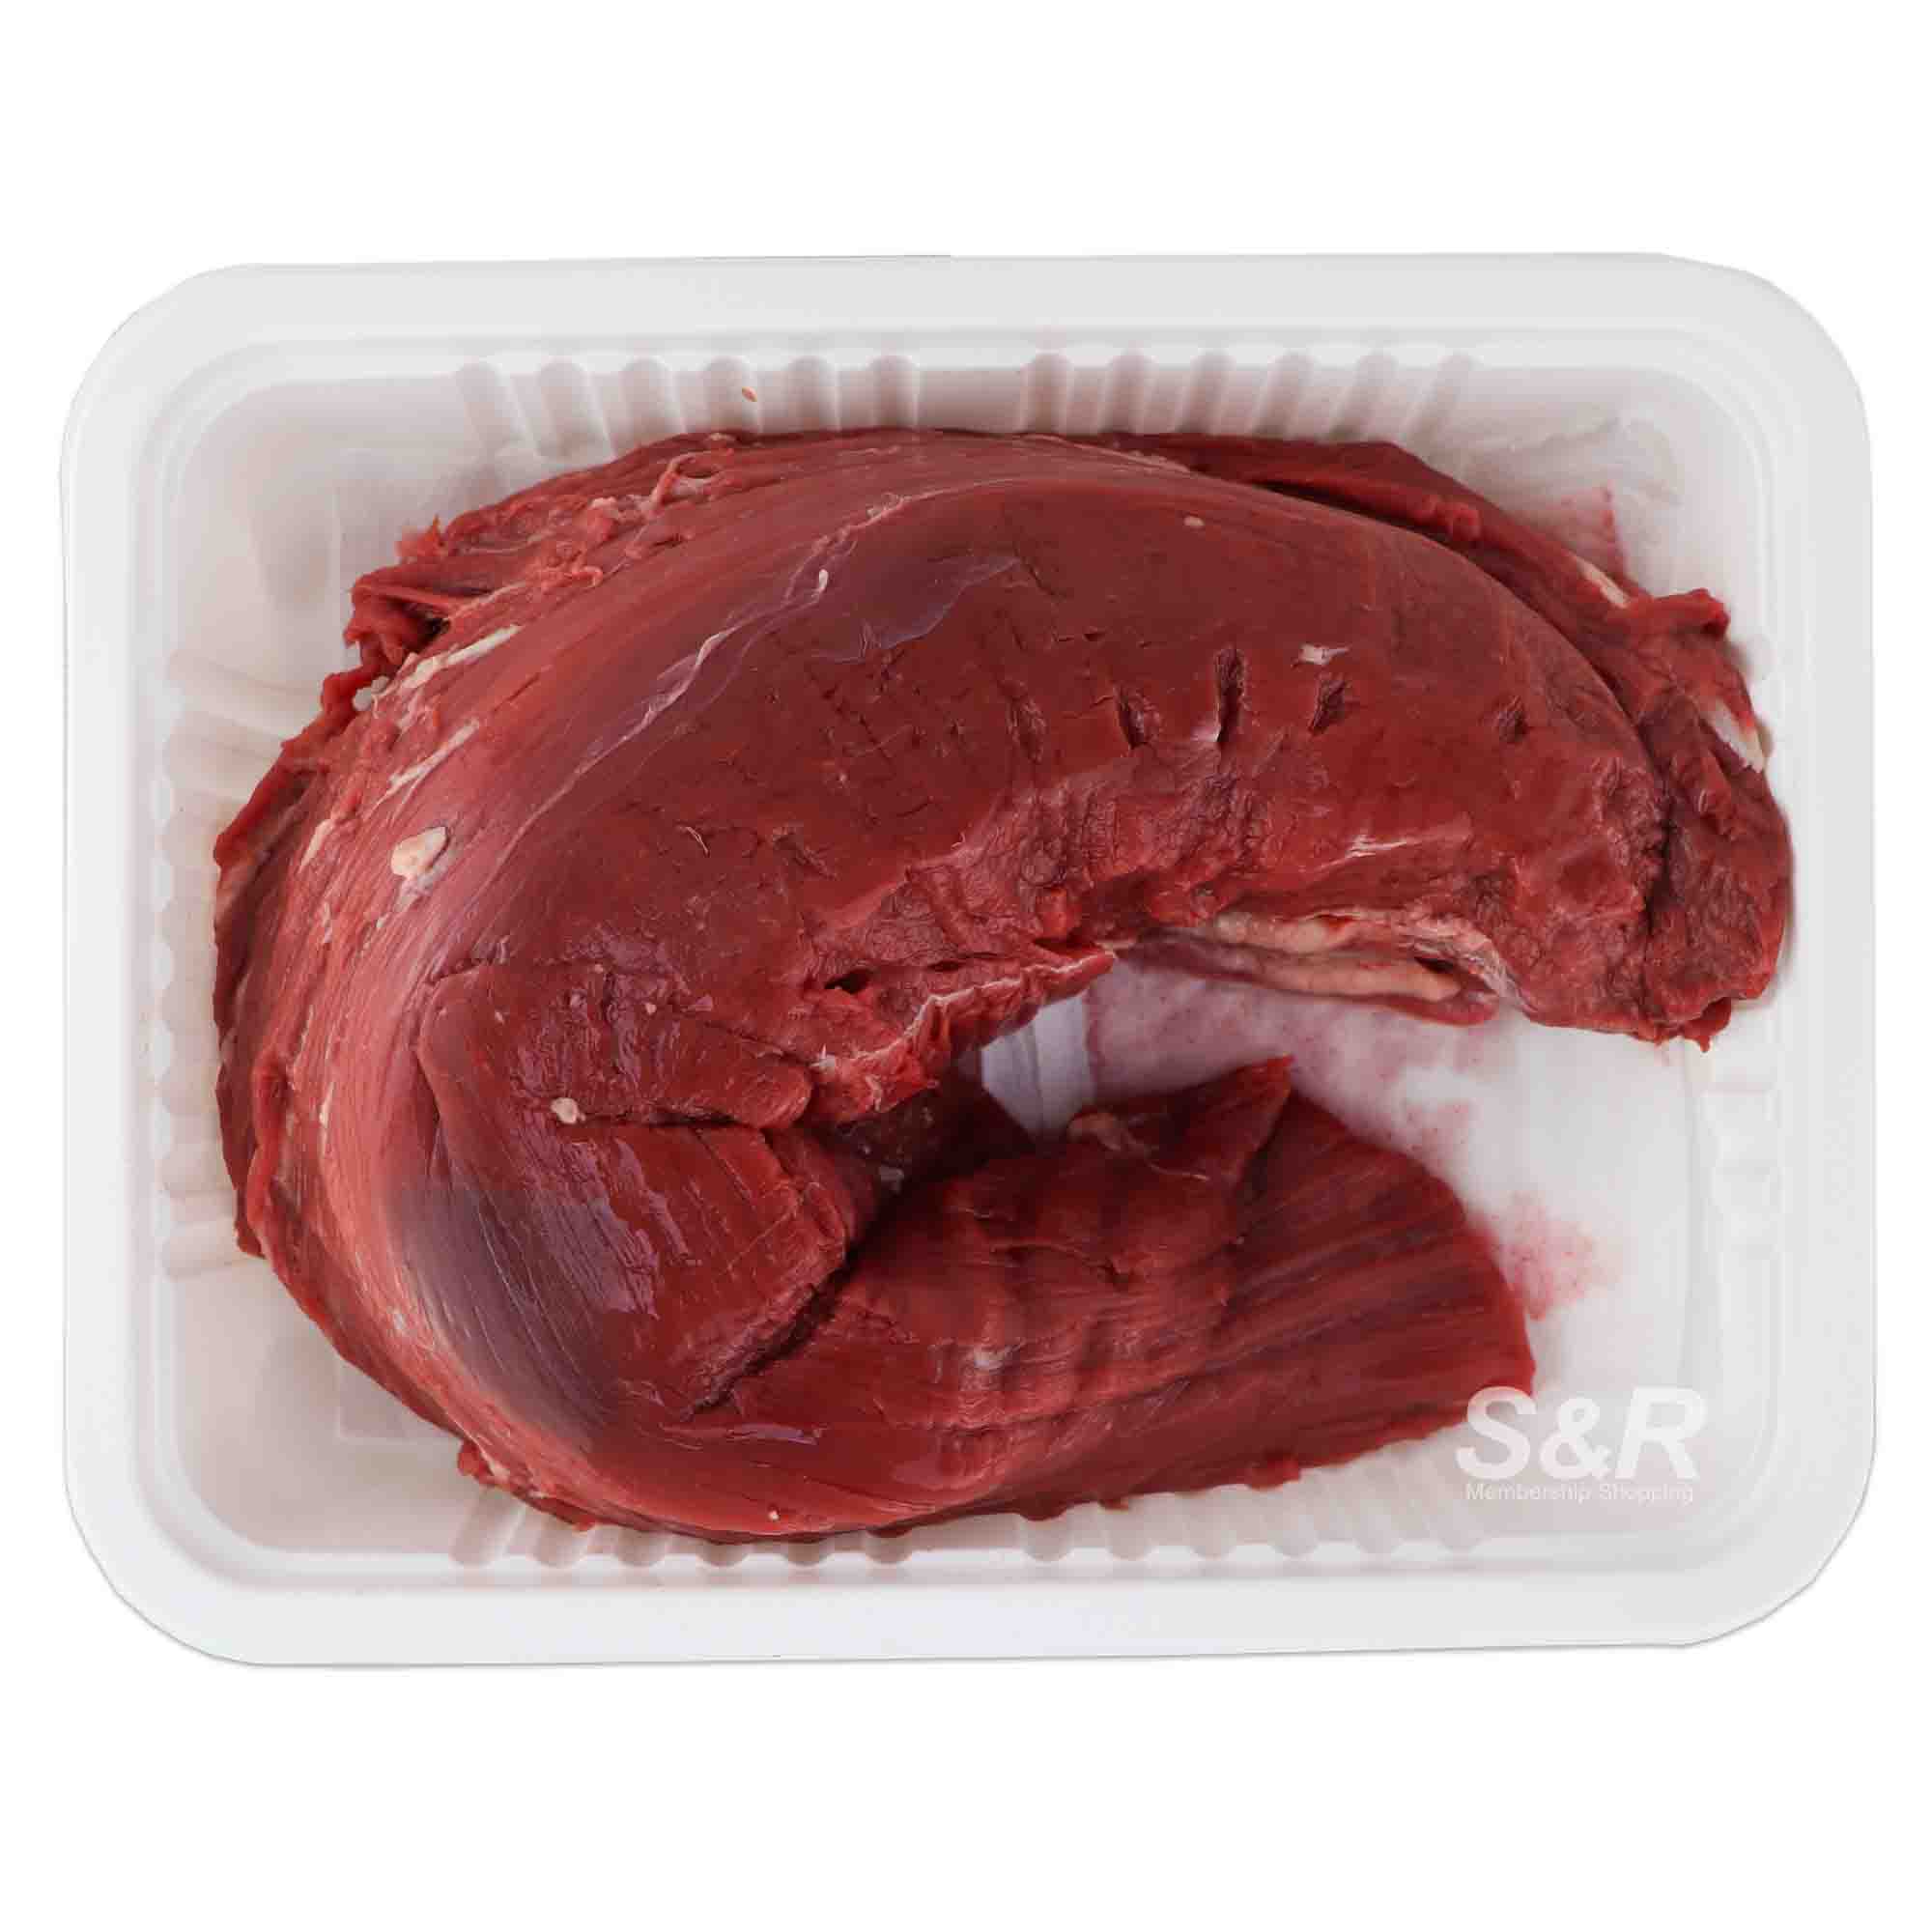 Member's Value Beef Tenderloin approx. 2kg